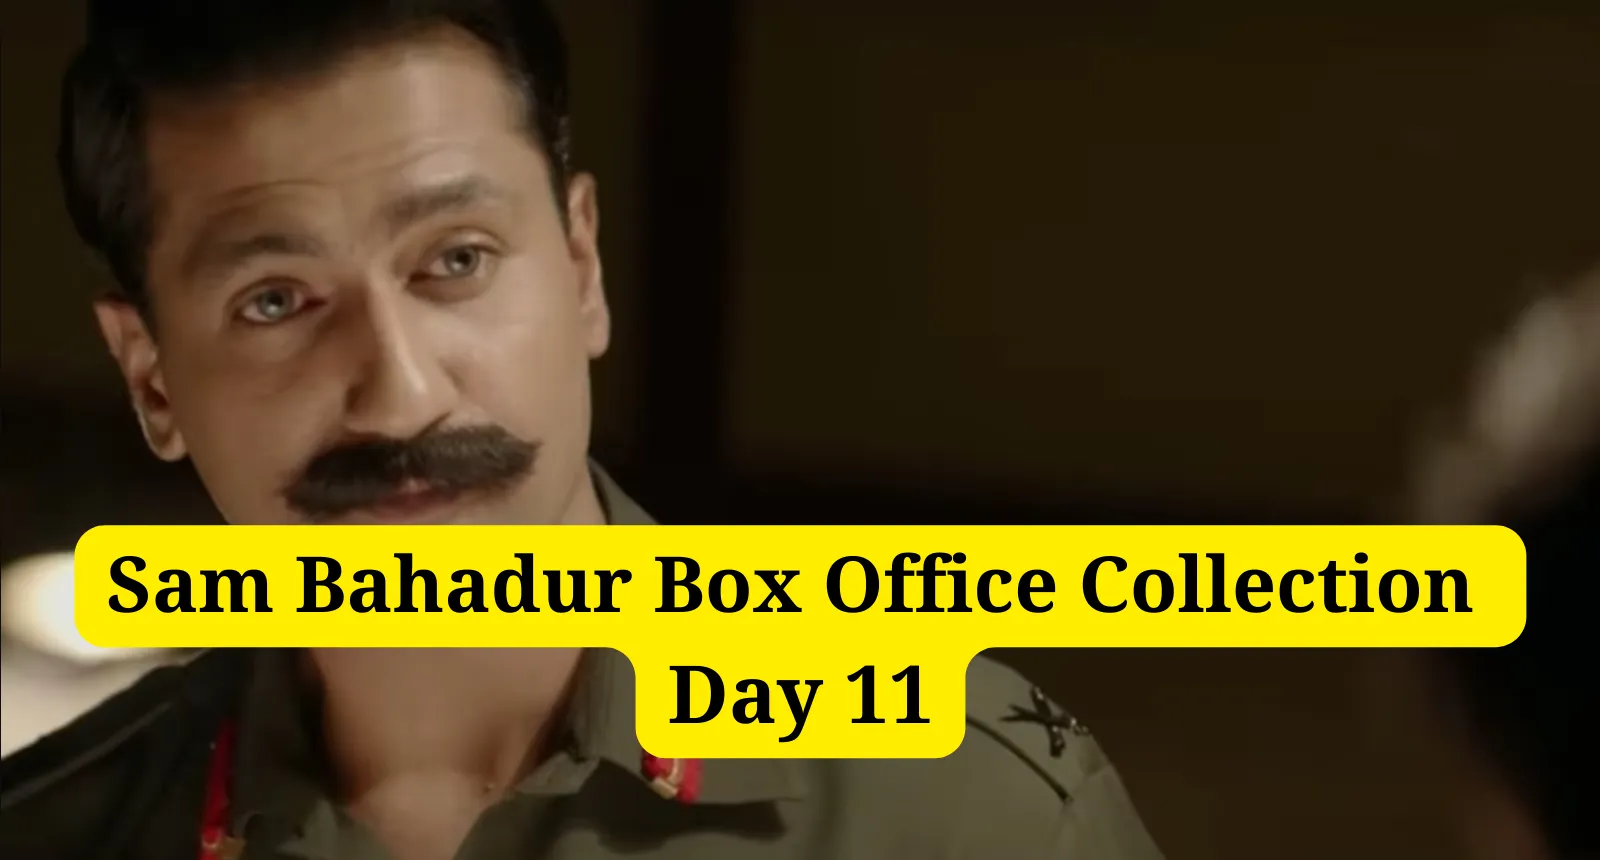 Sam Bahadur Box Office Collection Day 11